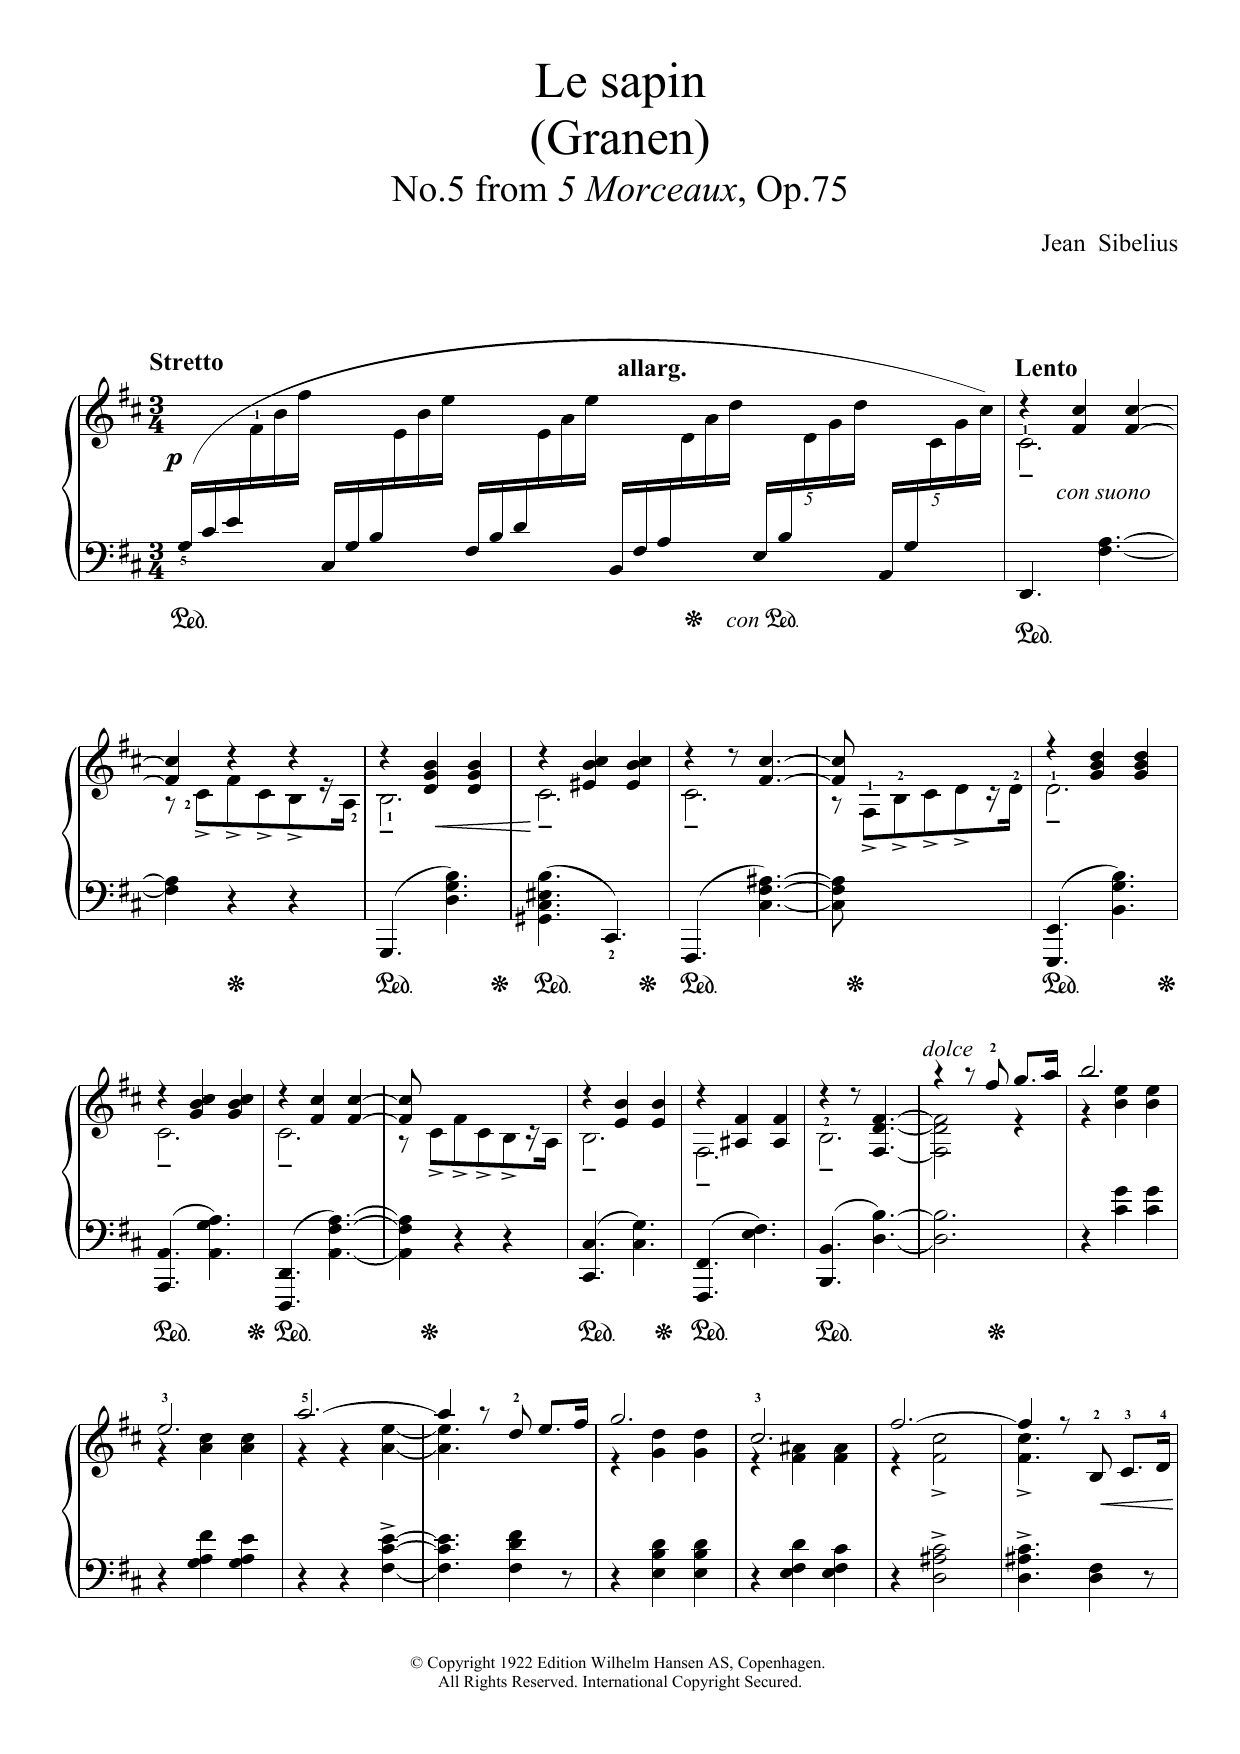 Download Jean Sibelius 5 Morceaux, Op.75 - V. Le Sapin Sheet Music